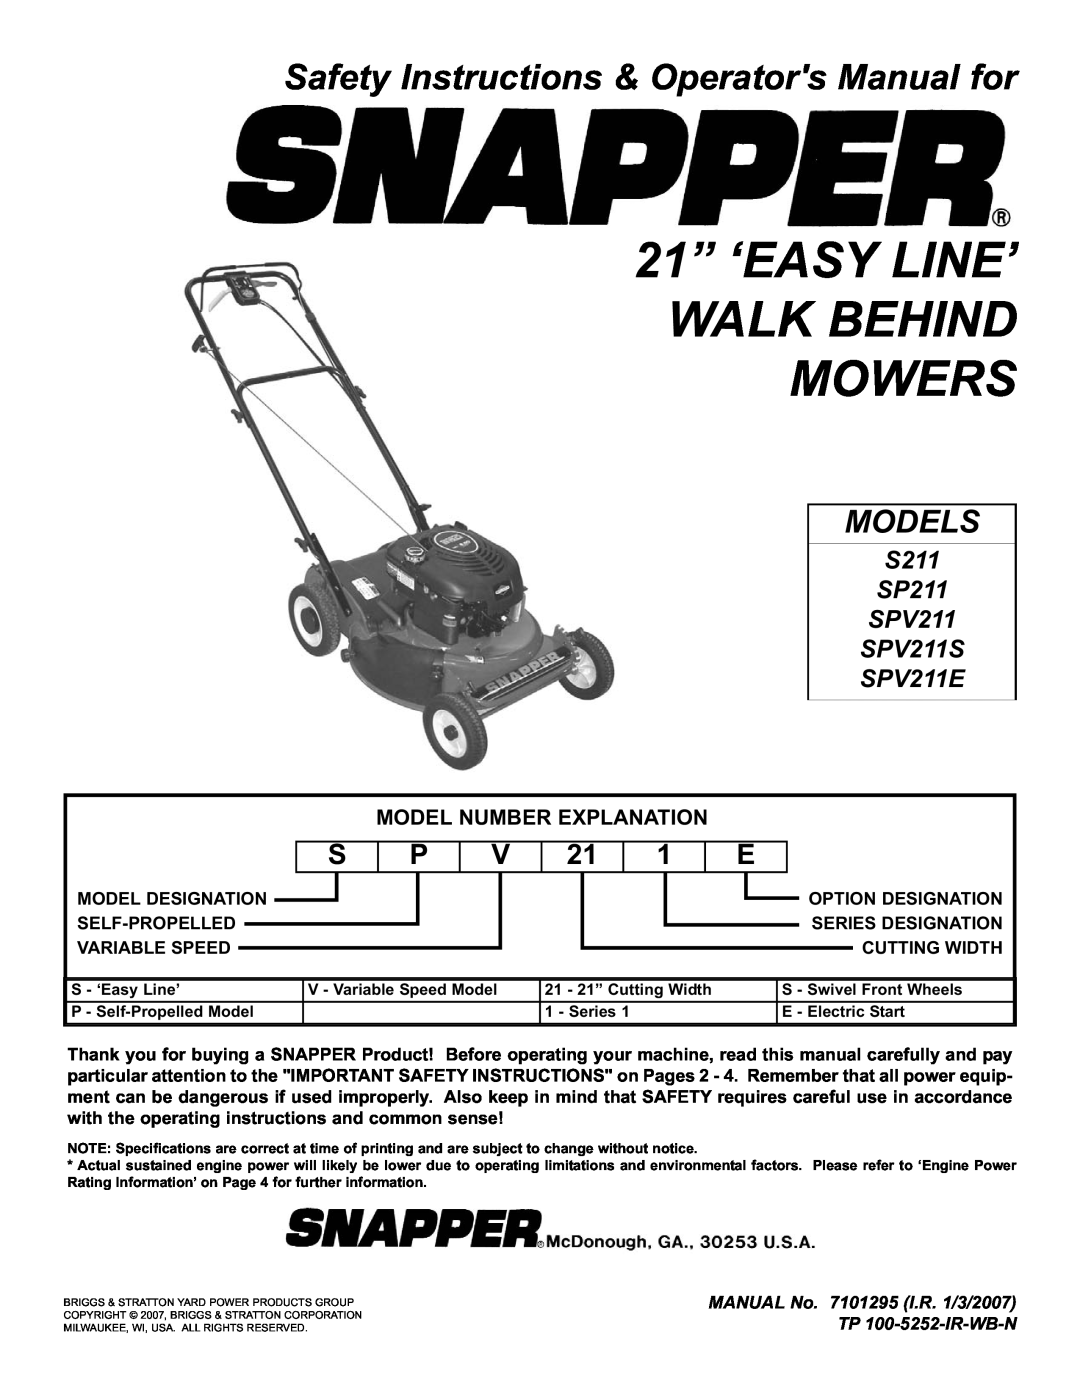 Snapper S211, SP211, SPV211, SPV211S, SPV211E important safety instructions 21” ‘EASY LINE’ WALK BEHIND MOWERS, Models 